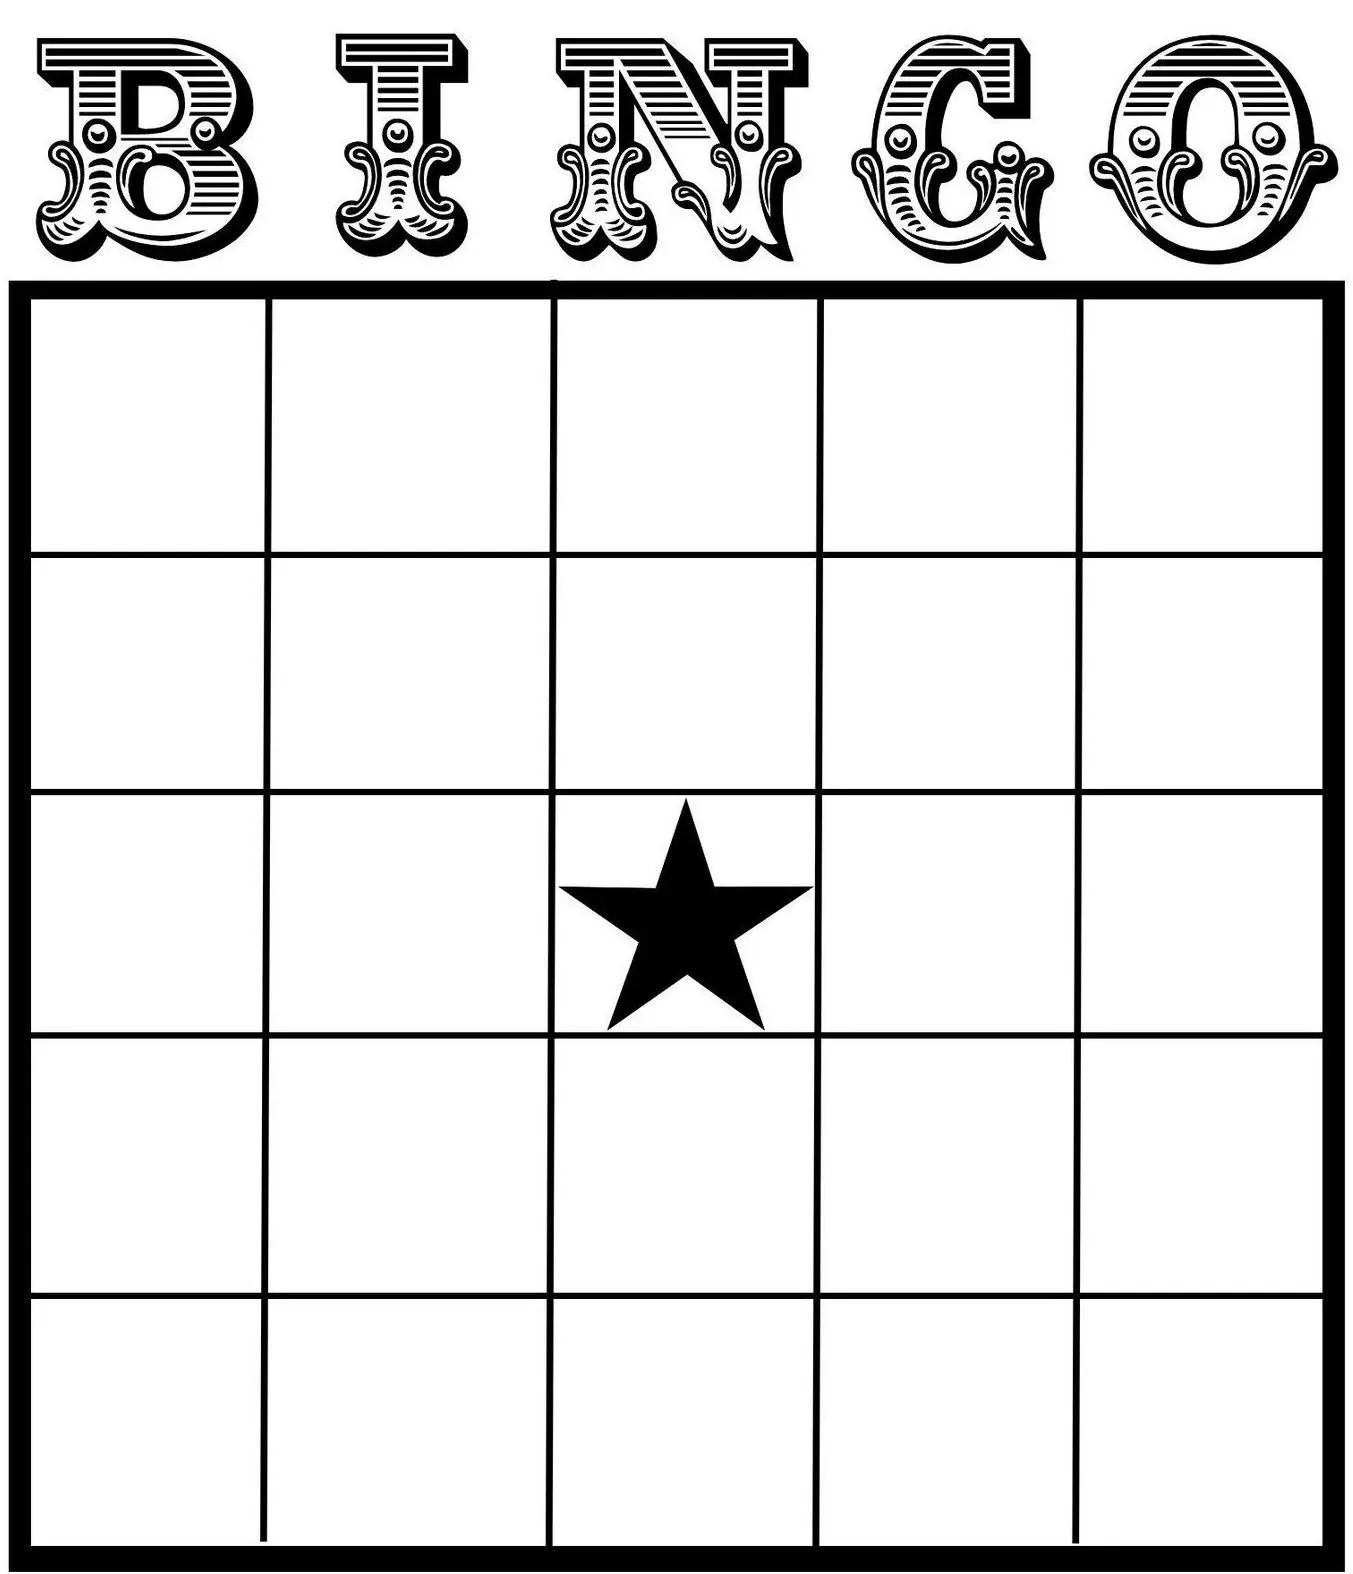 blank baby bingo cards